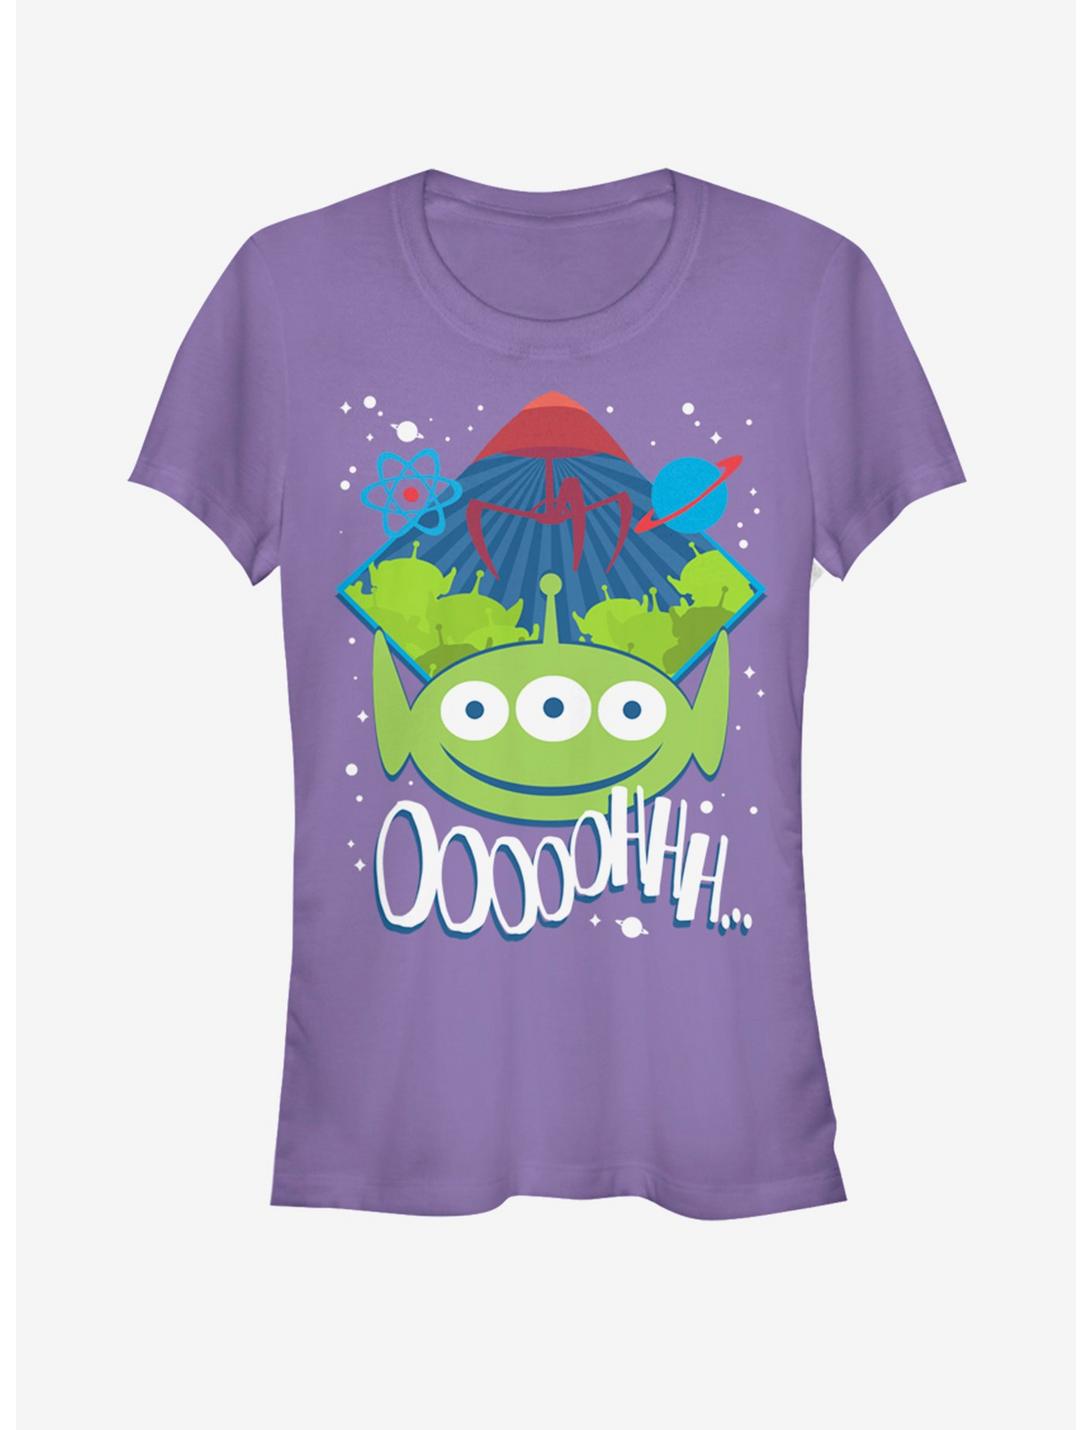 Disney Pixar Toy Story Alien Oooh Girls T-Shirt, PURPLE, hi-res